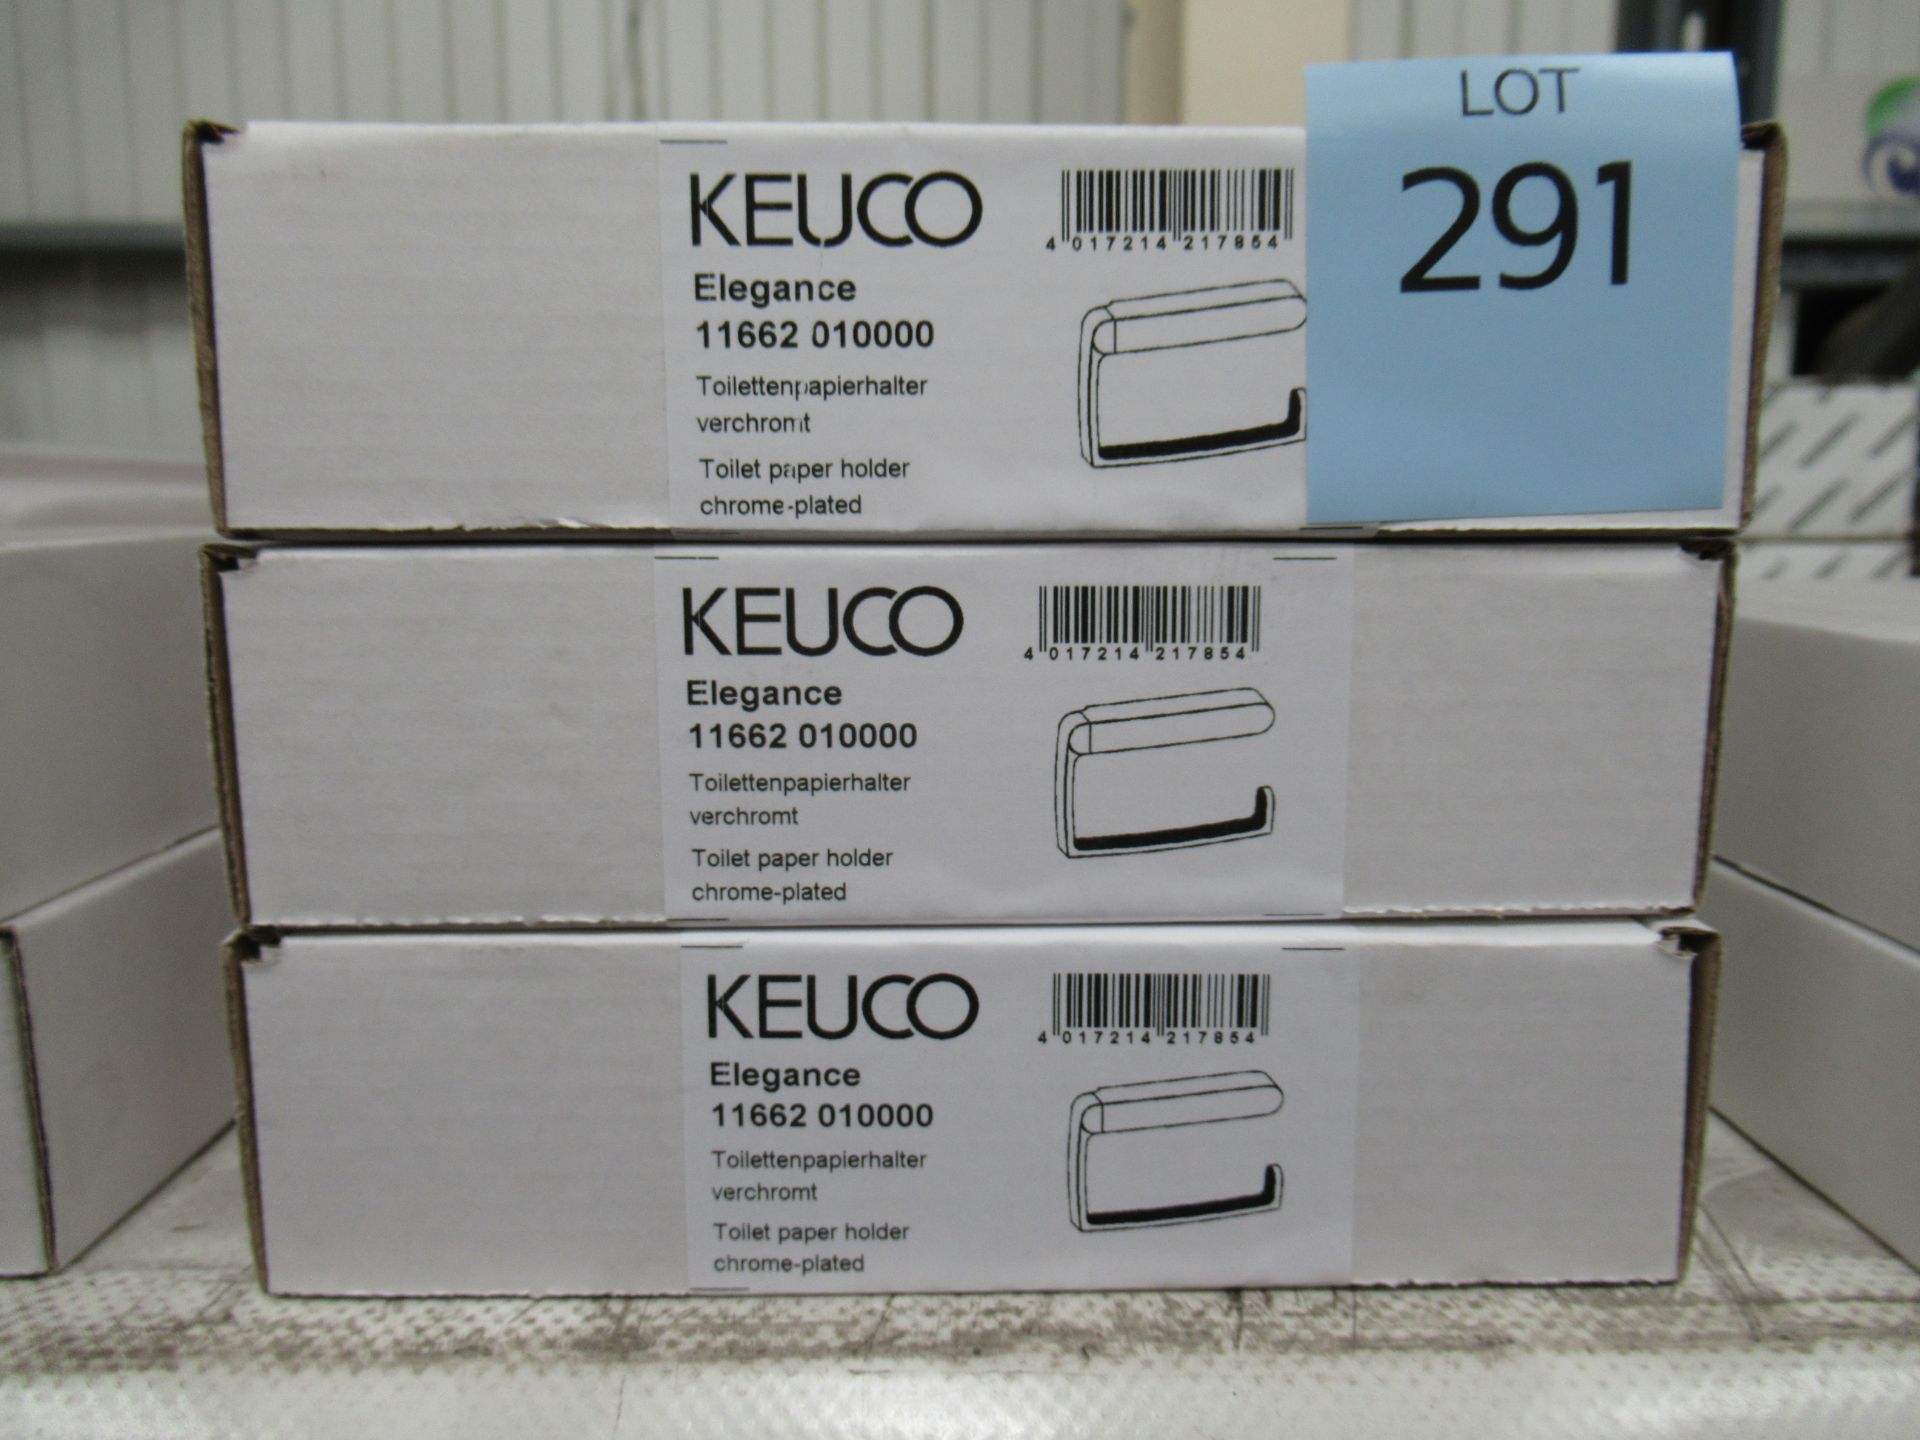 3 x Keuco Elegance Toilet Paper Holders Chrome Plated, P/N 11662-010000